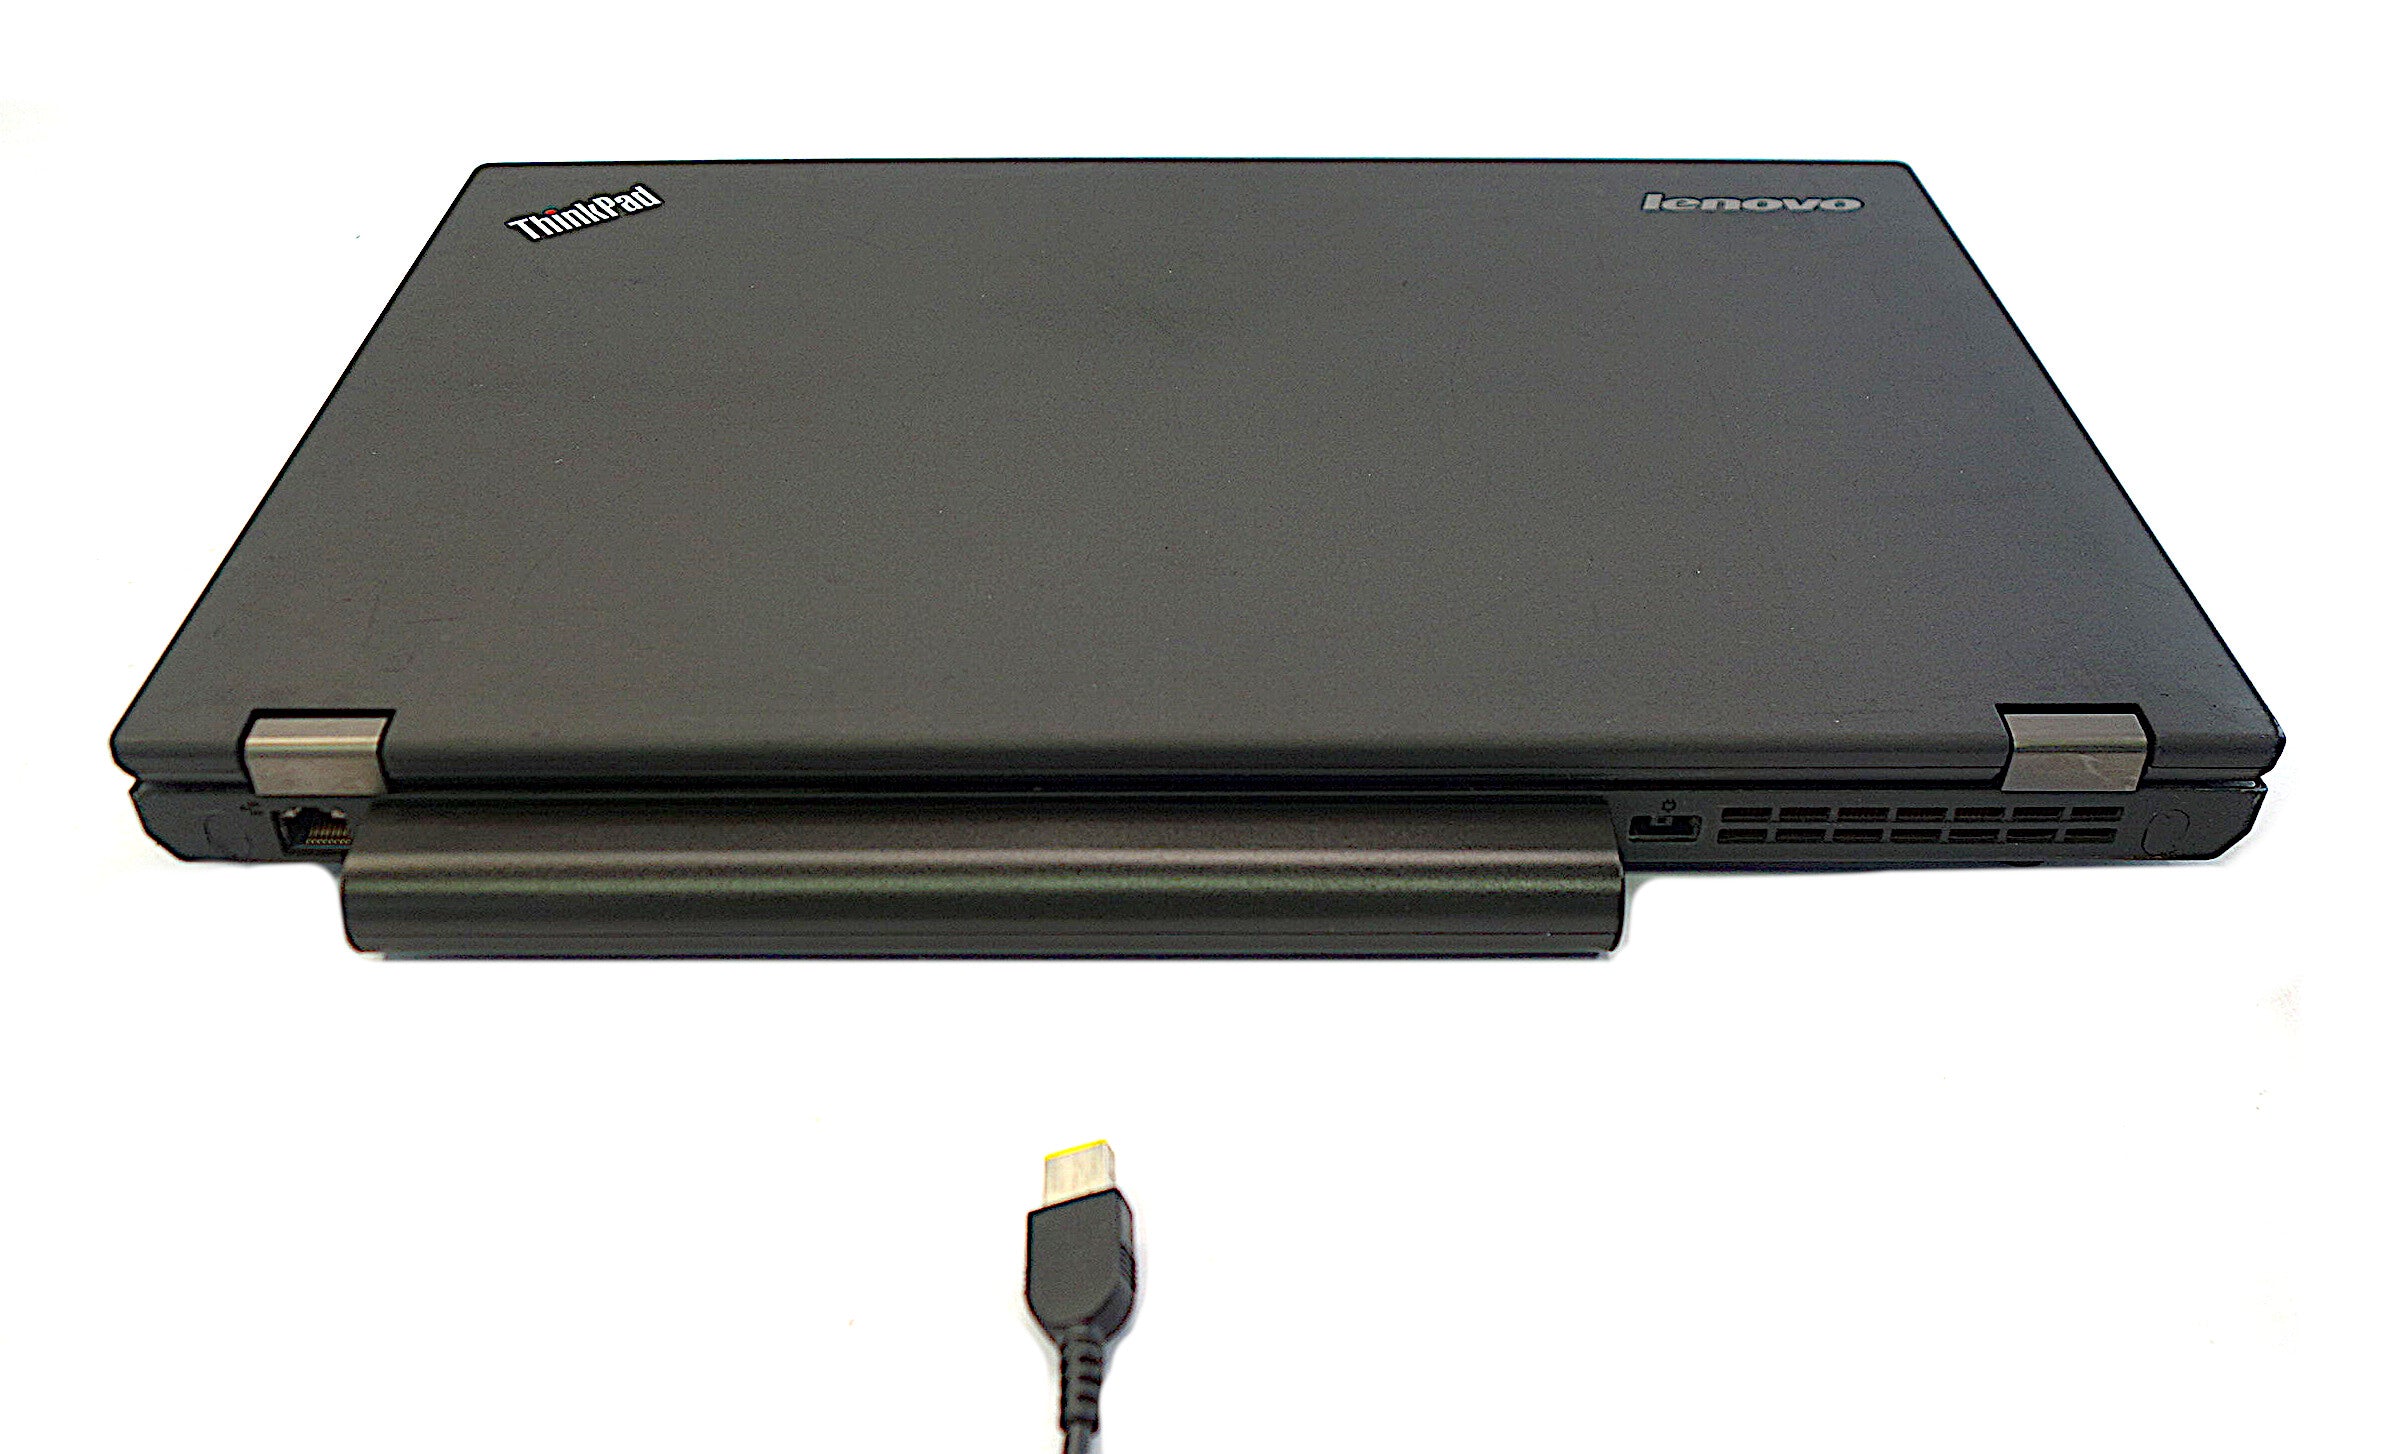 Lenovo ThinkPad W541 Laptop, 15.5" i7 4th Gen, 32GB RAM, 256GB SSD